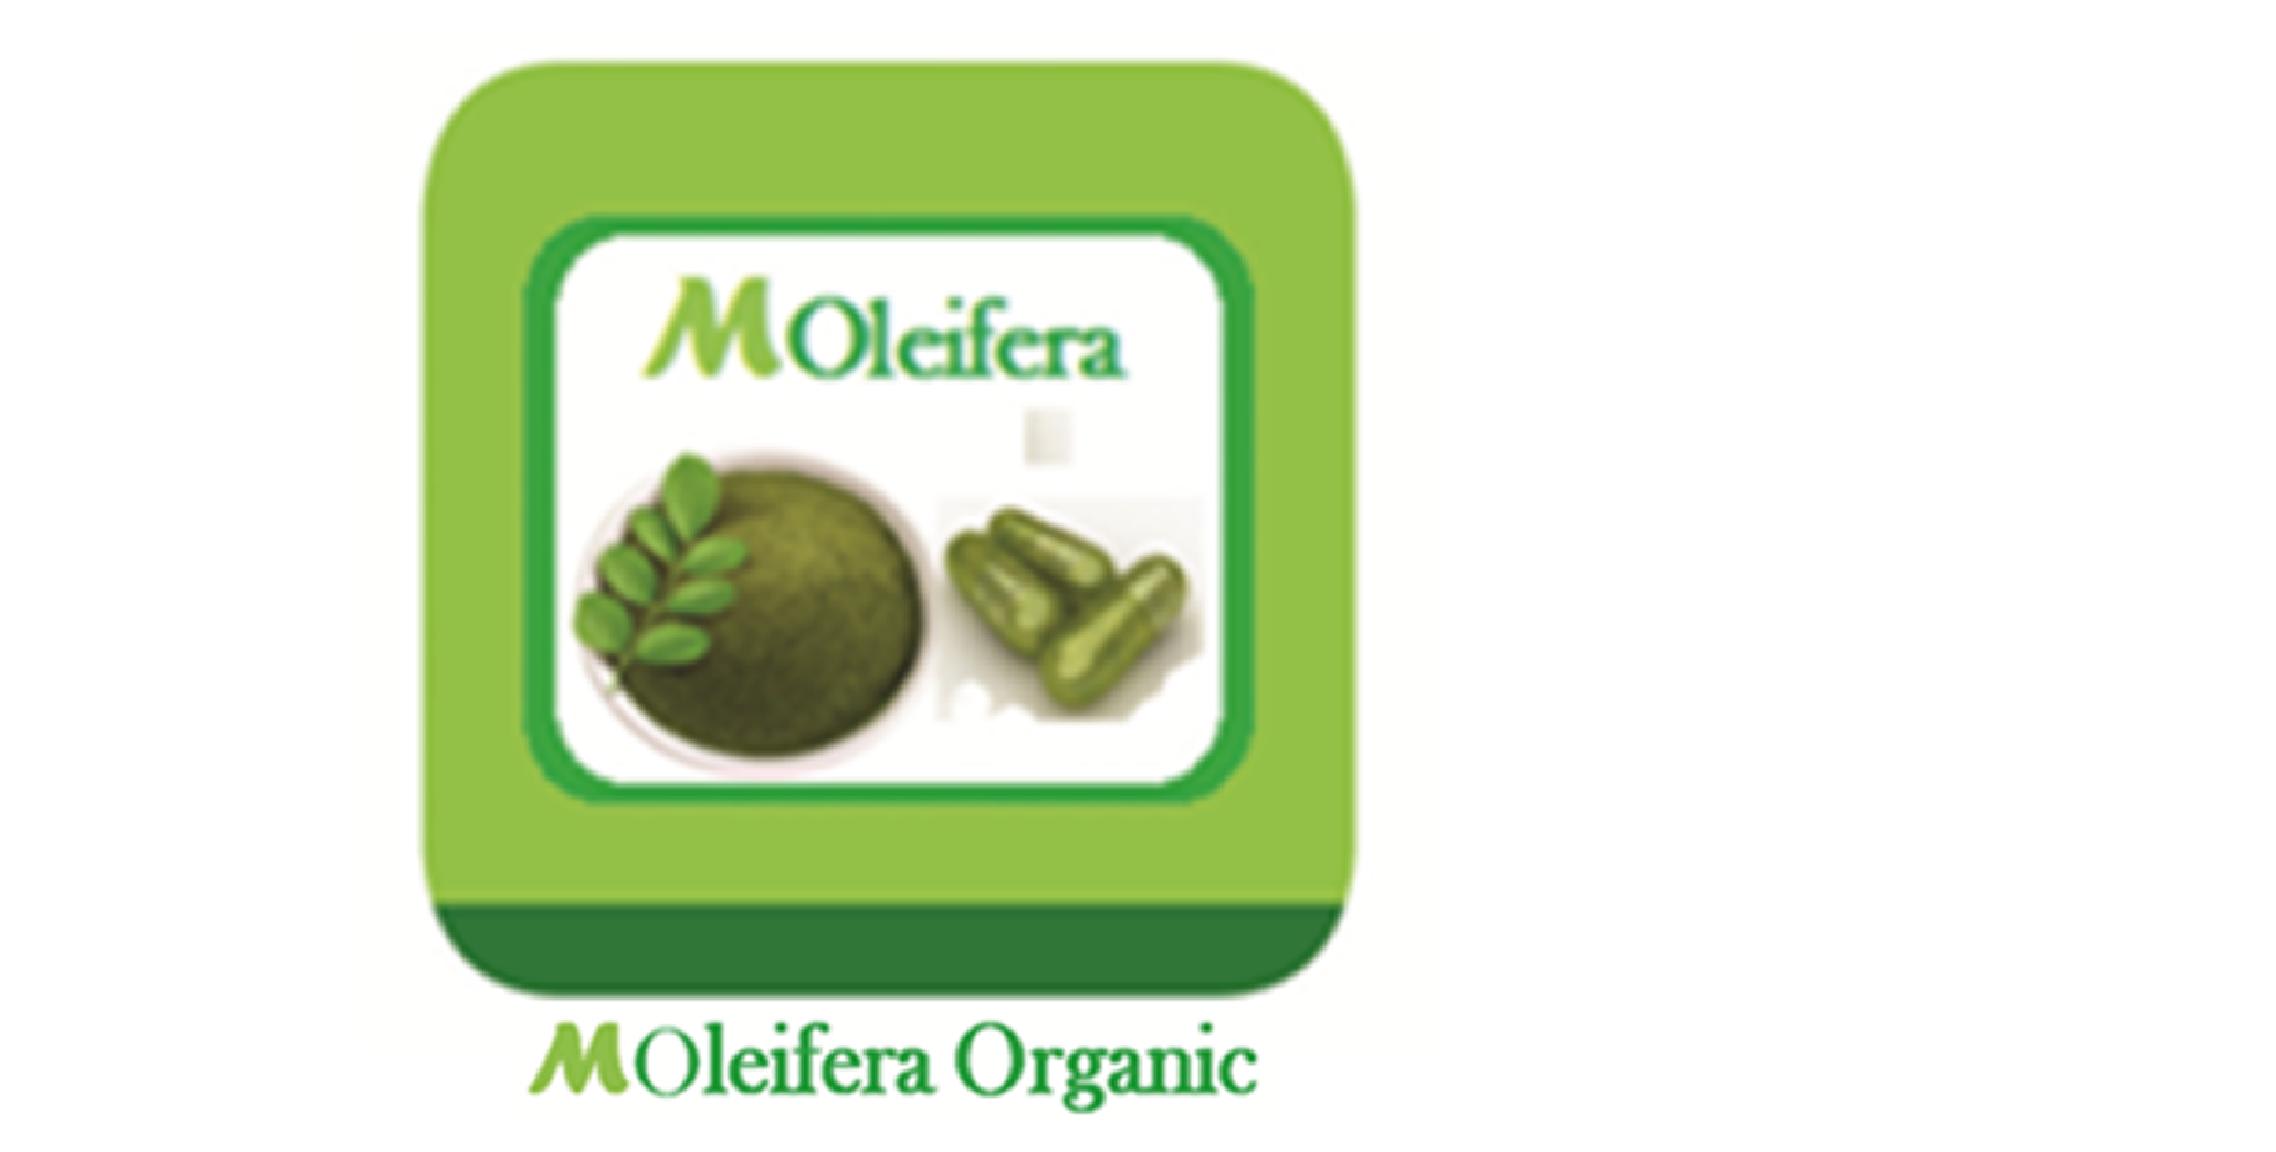 MOleifera Organic